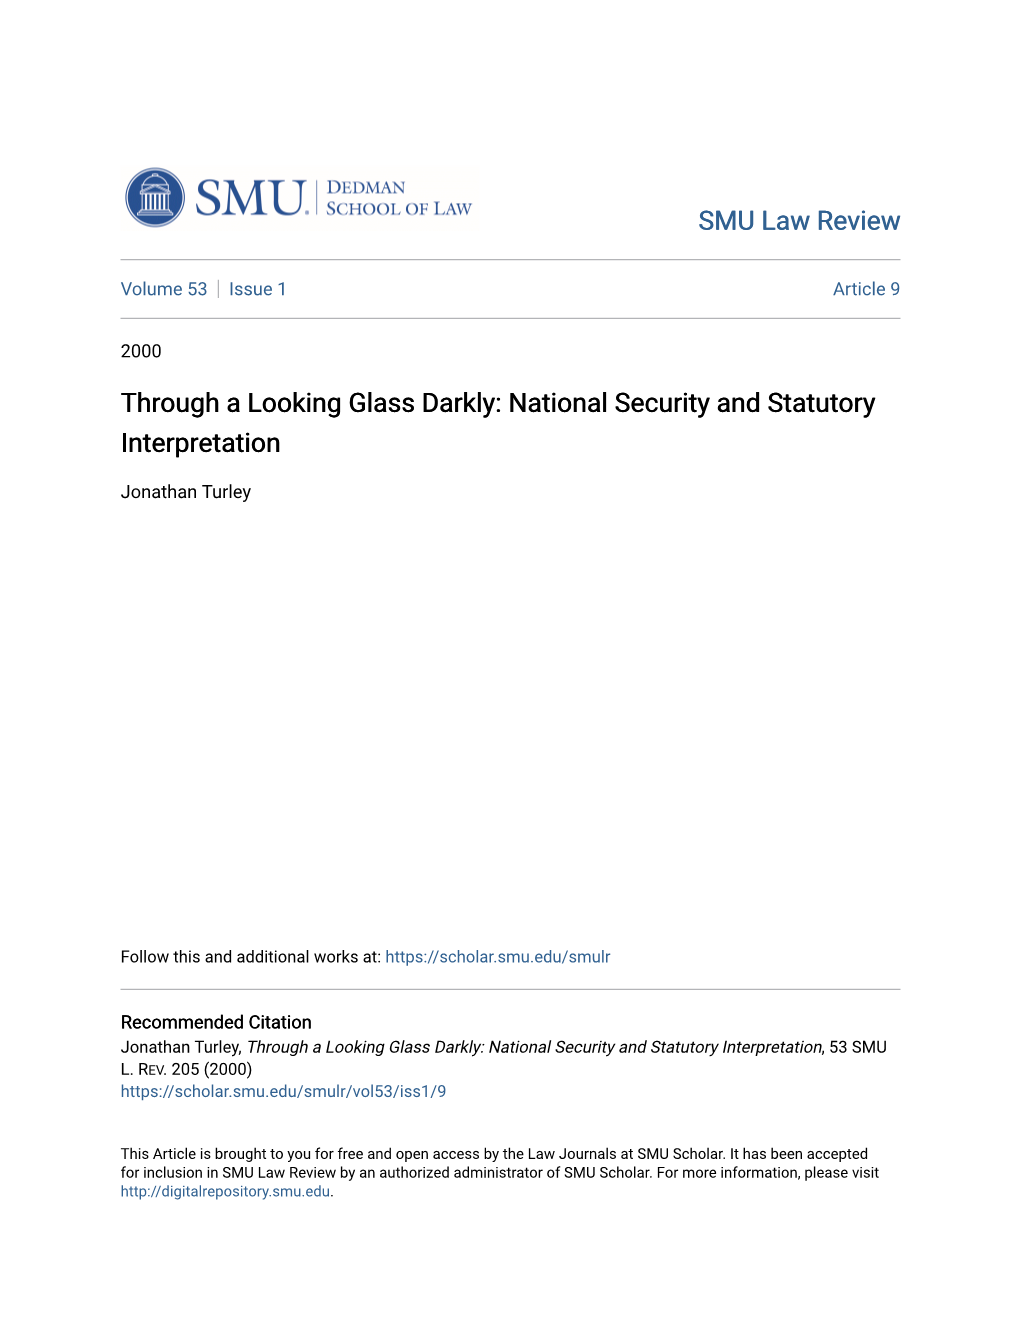 National Security and Statutory Interpretation